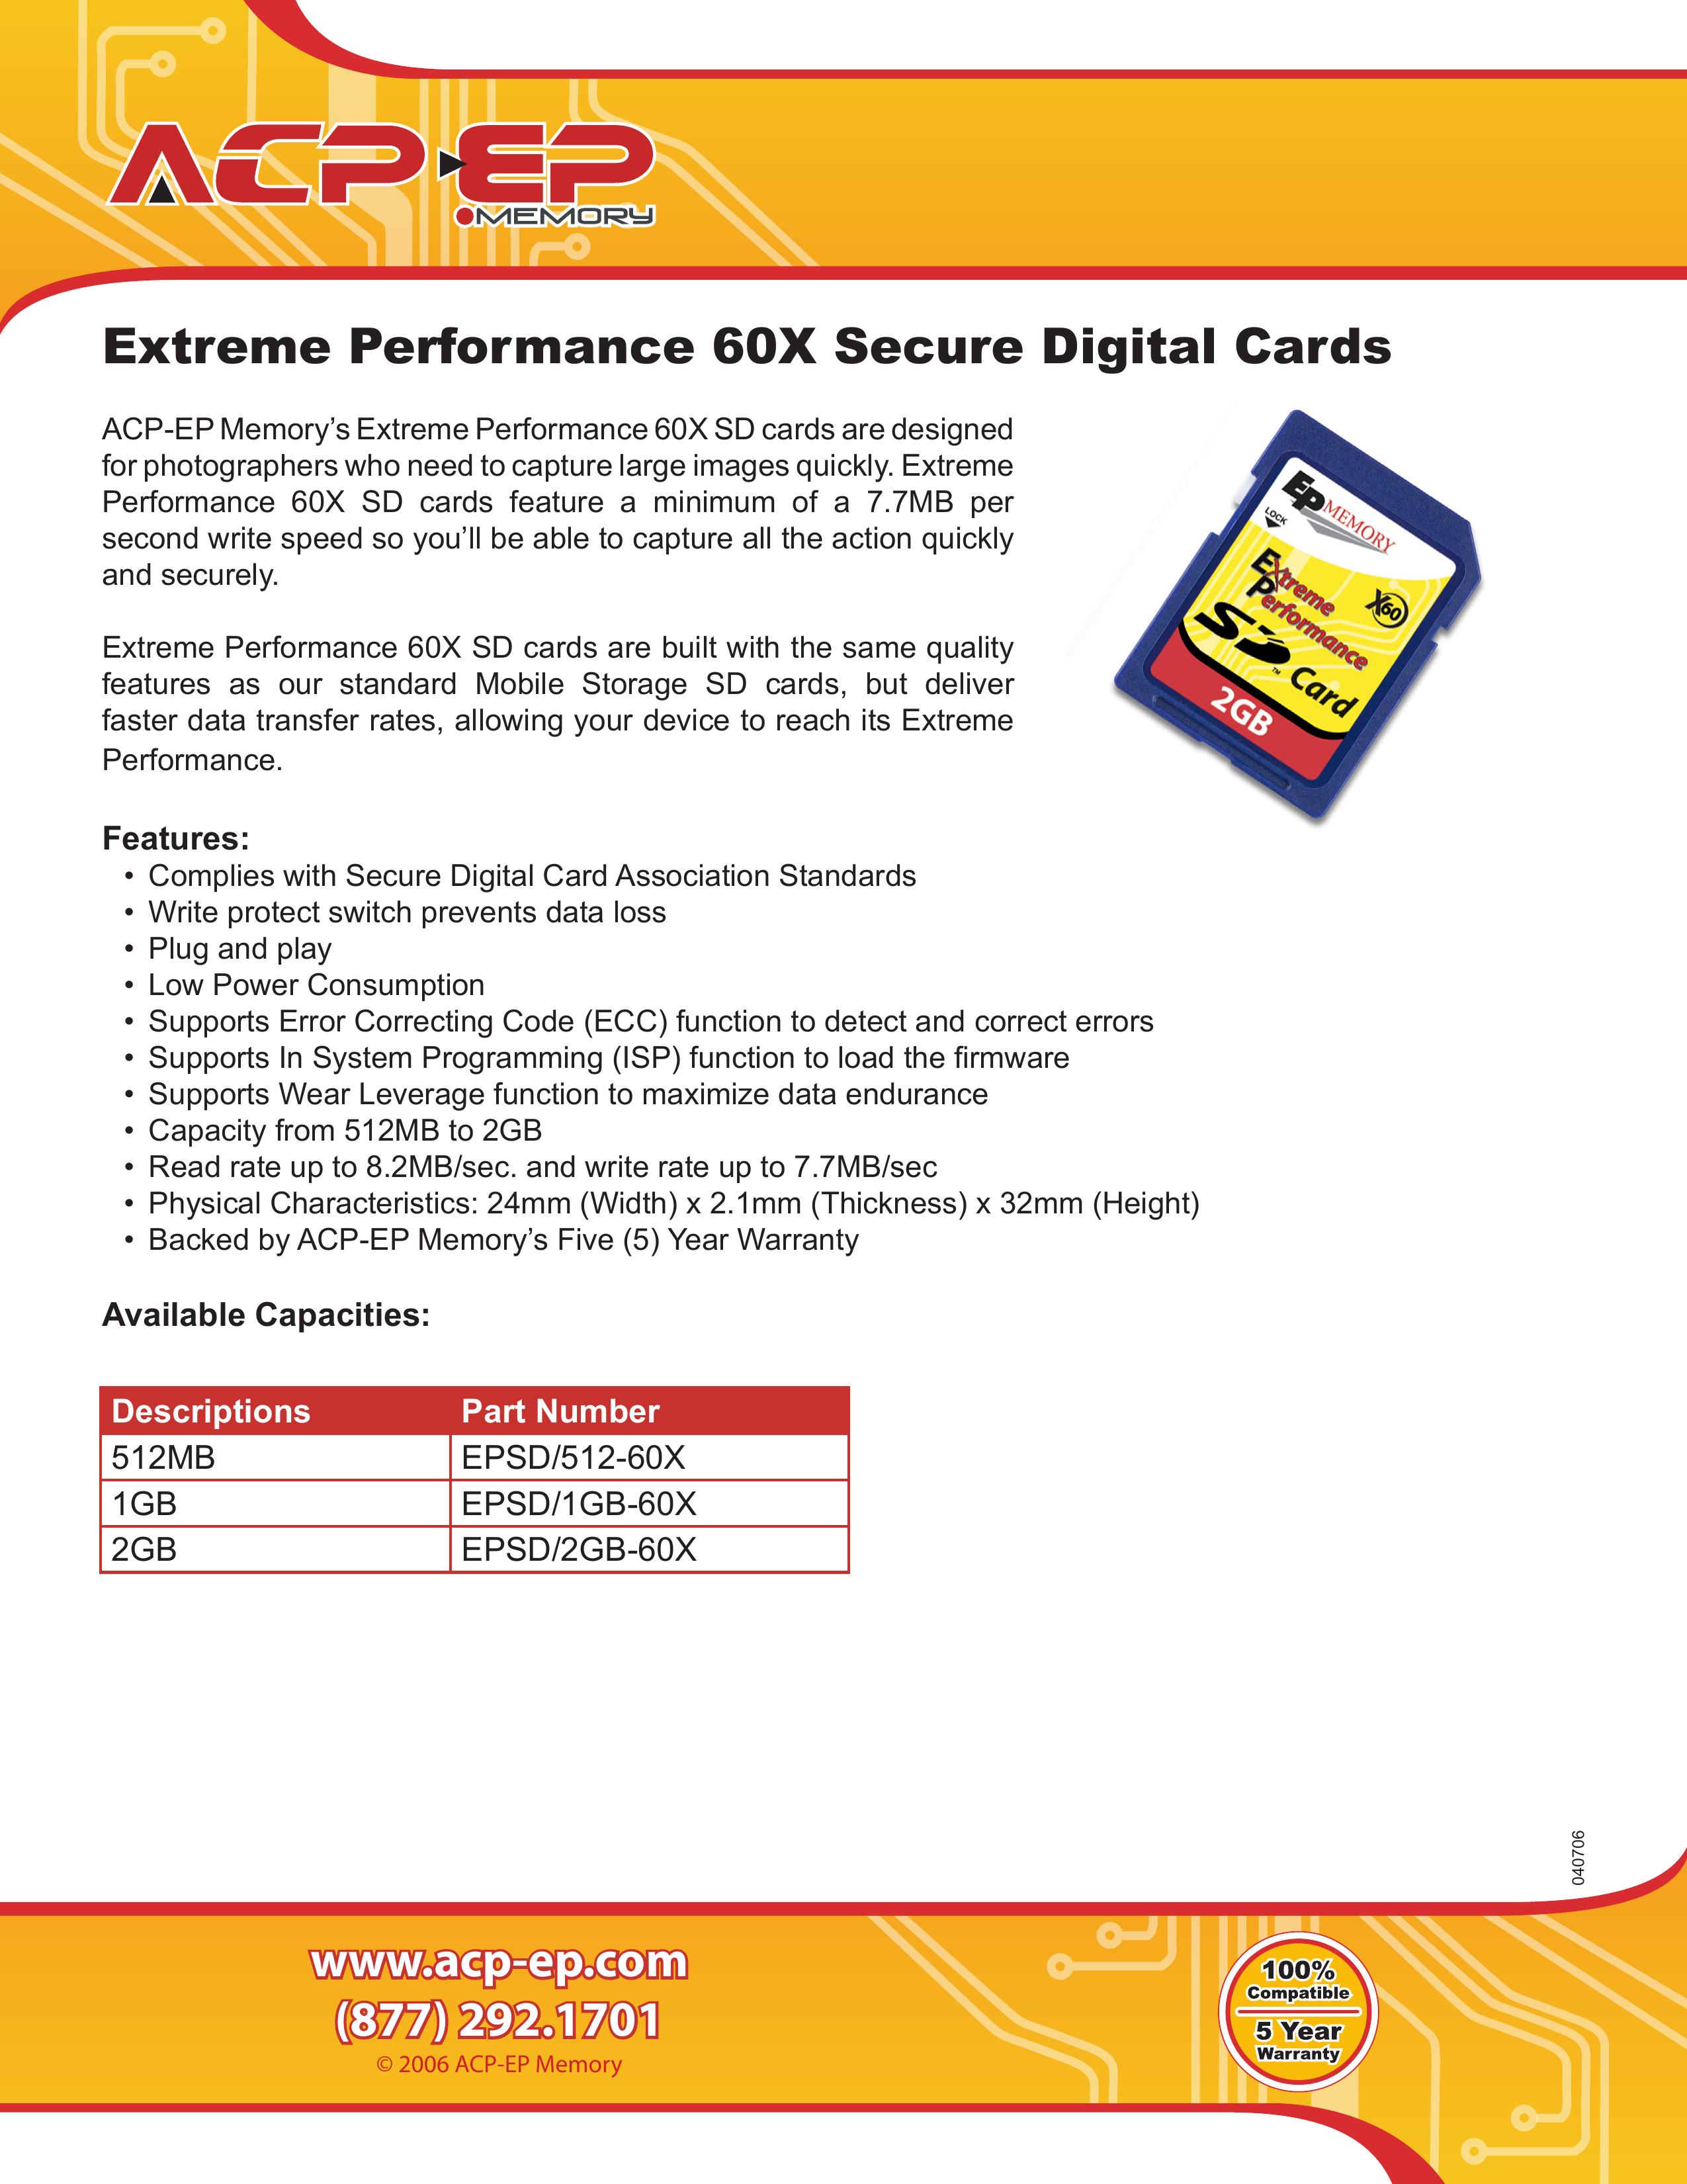 ACP-EP Memory EPSD/2GB-60X Camera Accessories User Manual